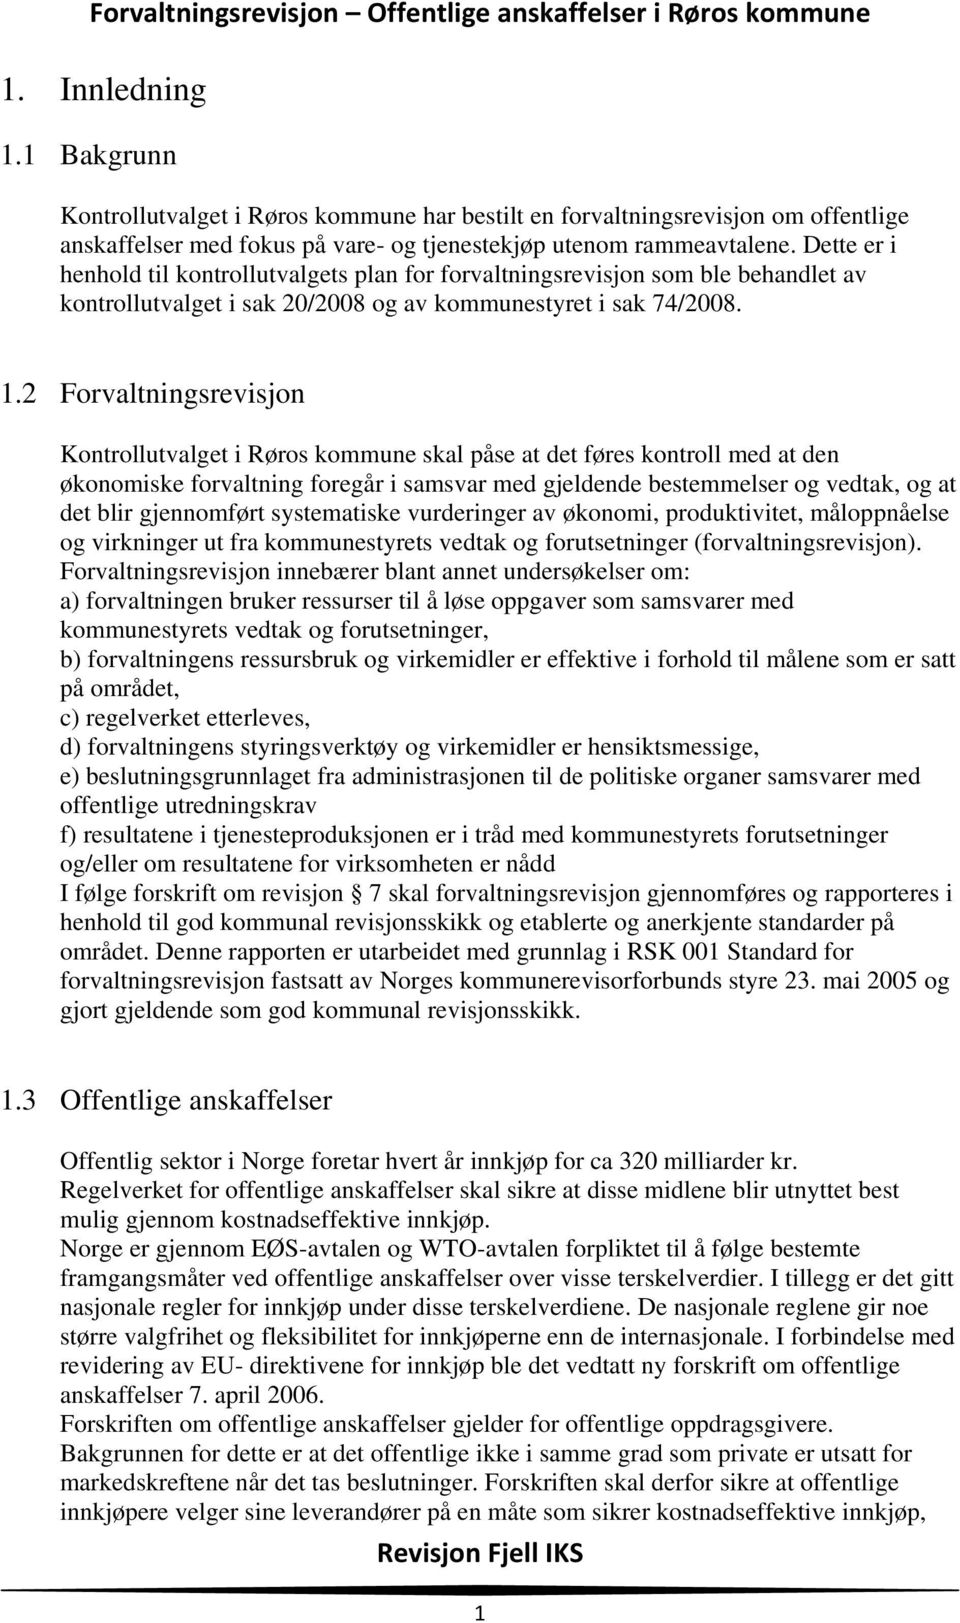 2 Forvaltningsrevisjon Kontrollutvalget i Røros kommune skal påse at det føres kontroll med at den økonomiske forvaltning foregår i samsvar med gjeldende bestemmelser og vedtak, og at det blir